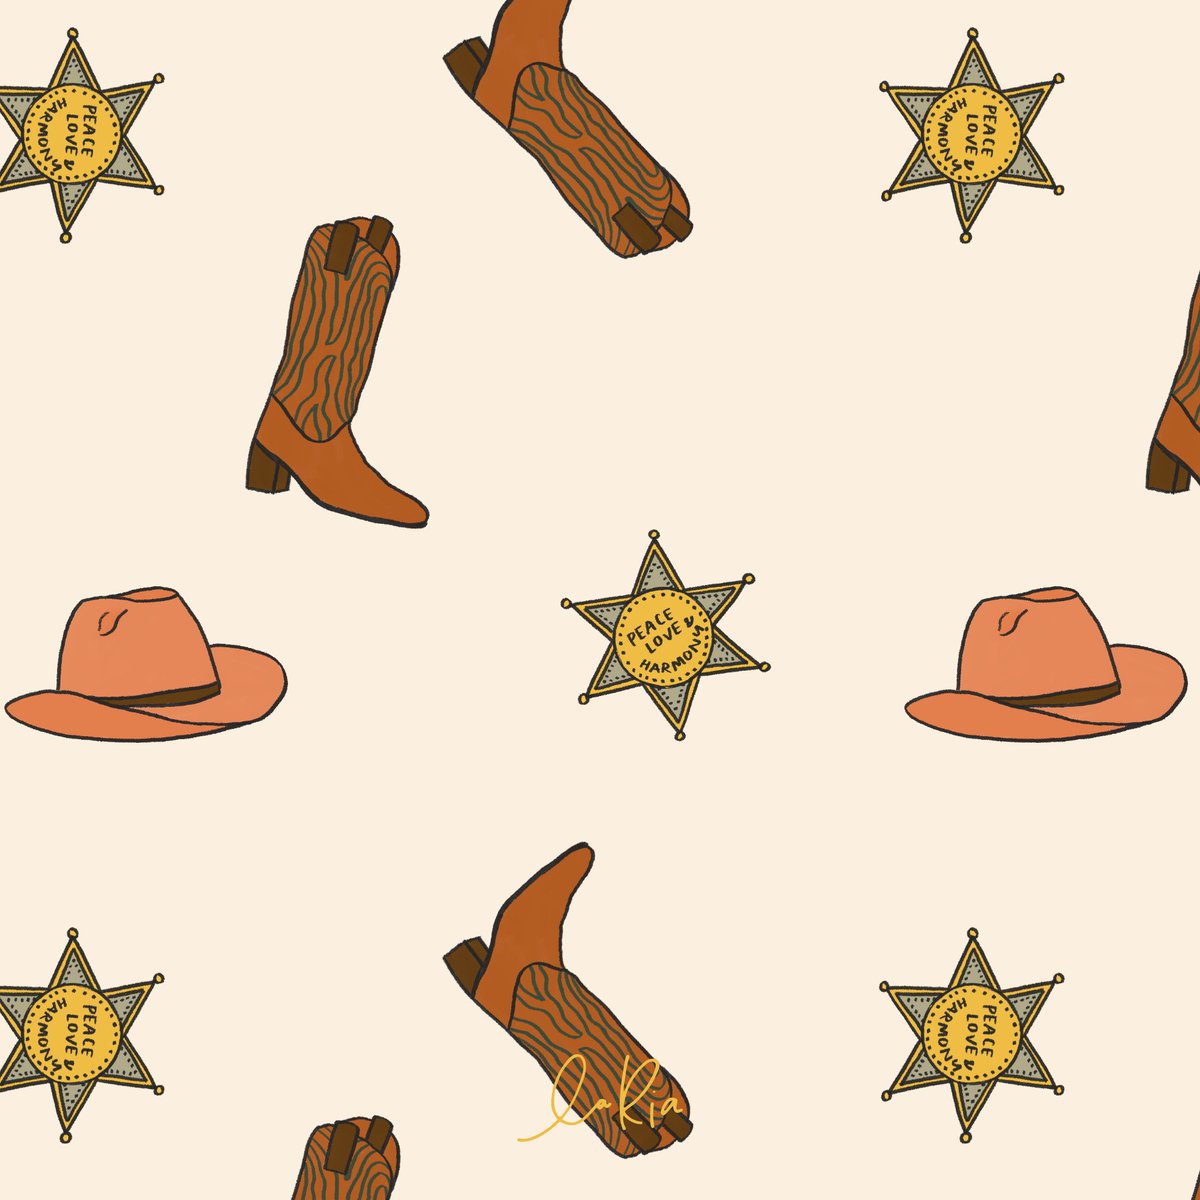 Cowboy pattern 🤠 #art #illustration #pattern #cowboy #illustrations